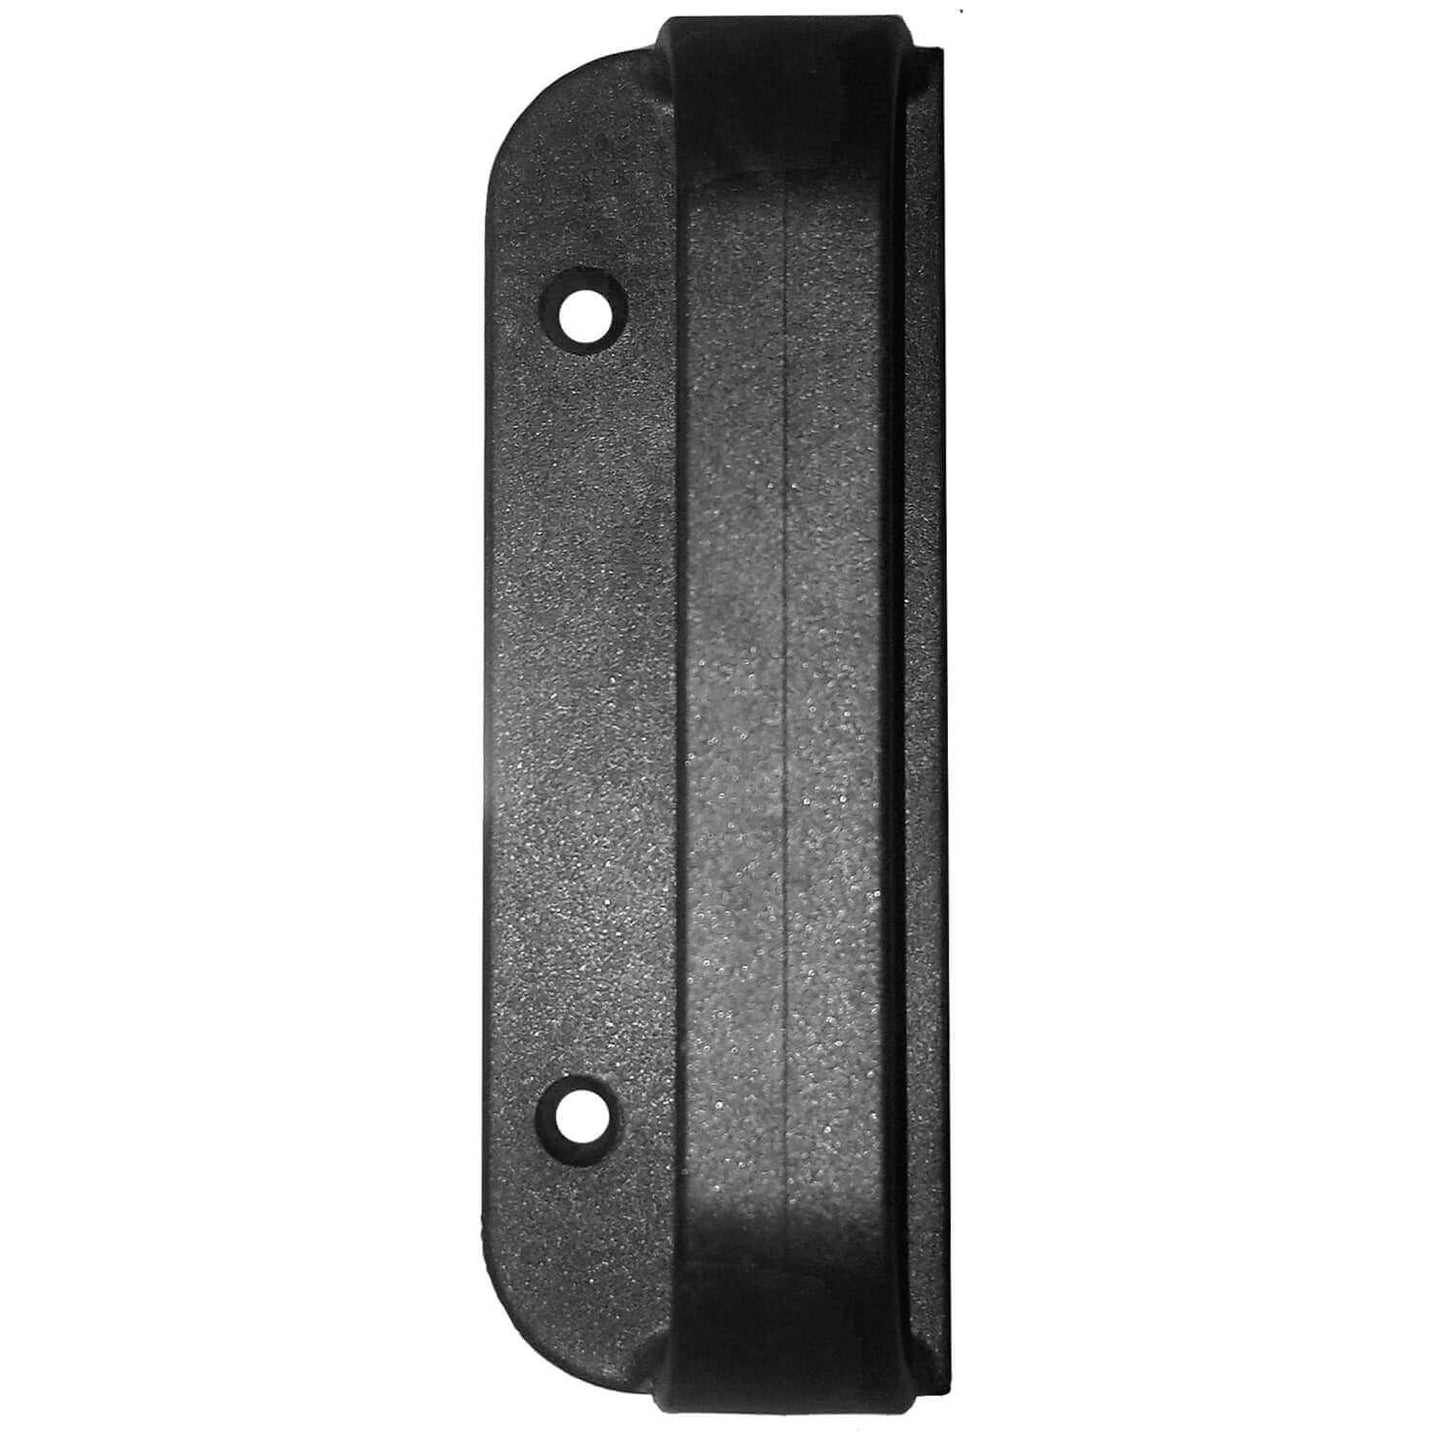 Universal NYLON GATE HANDLE -BLACK: Pull works with Wood, Metal, or Vinyl gates. (1 PACK)